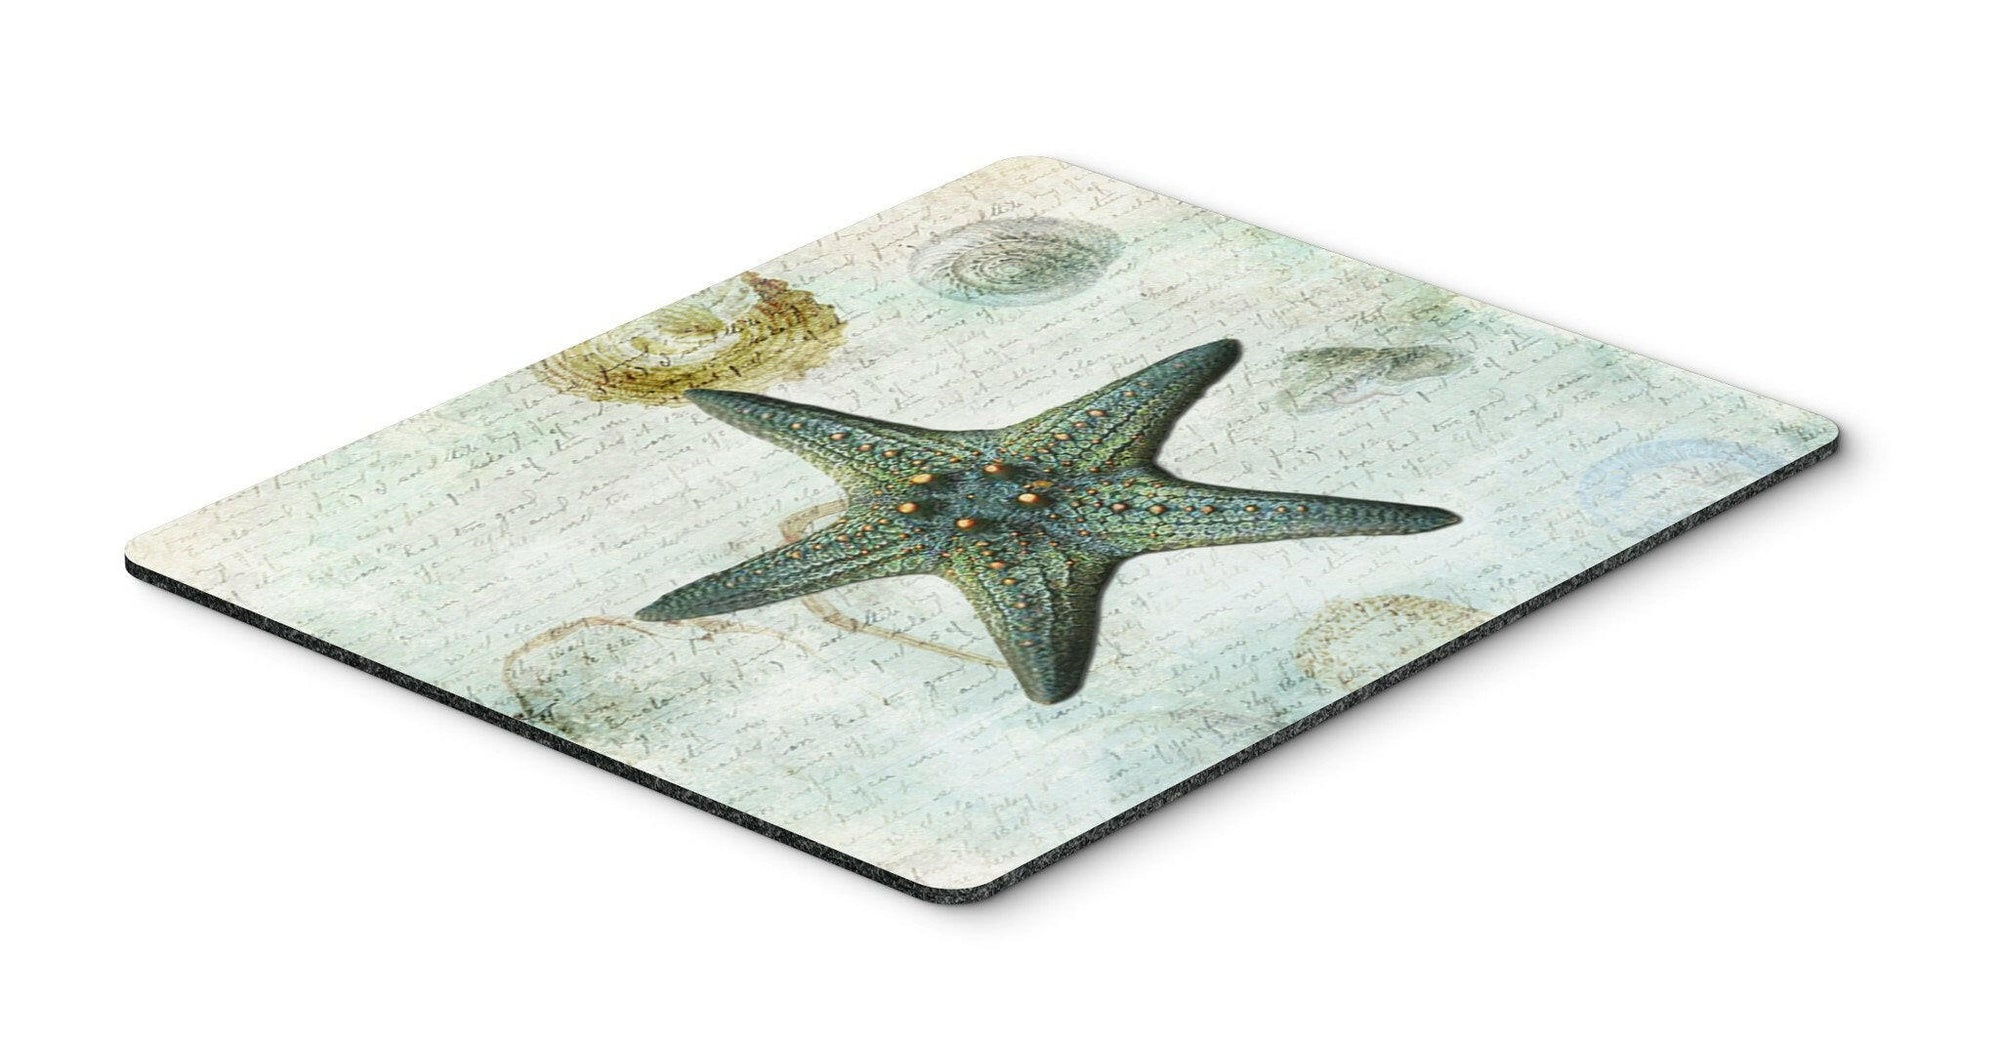 Starfish  Mouse Pad, Hot Pad or Trivet by Caroline's Treasures